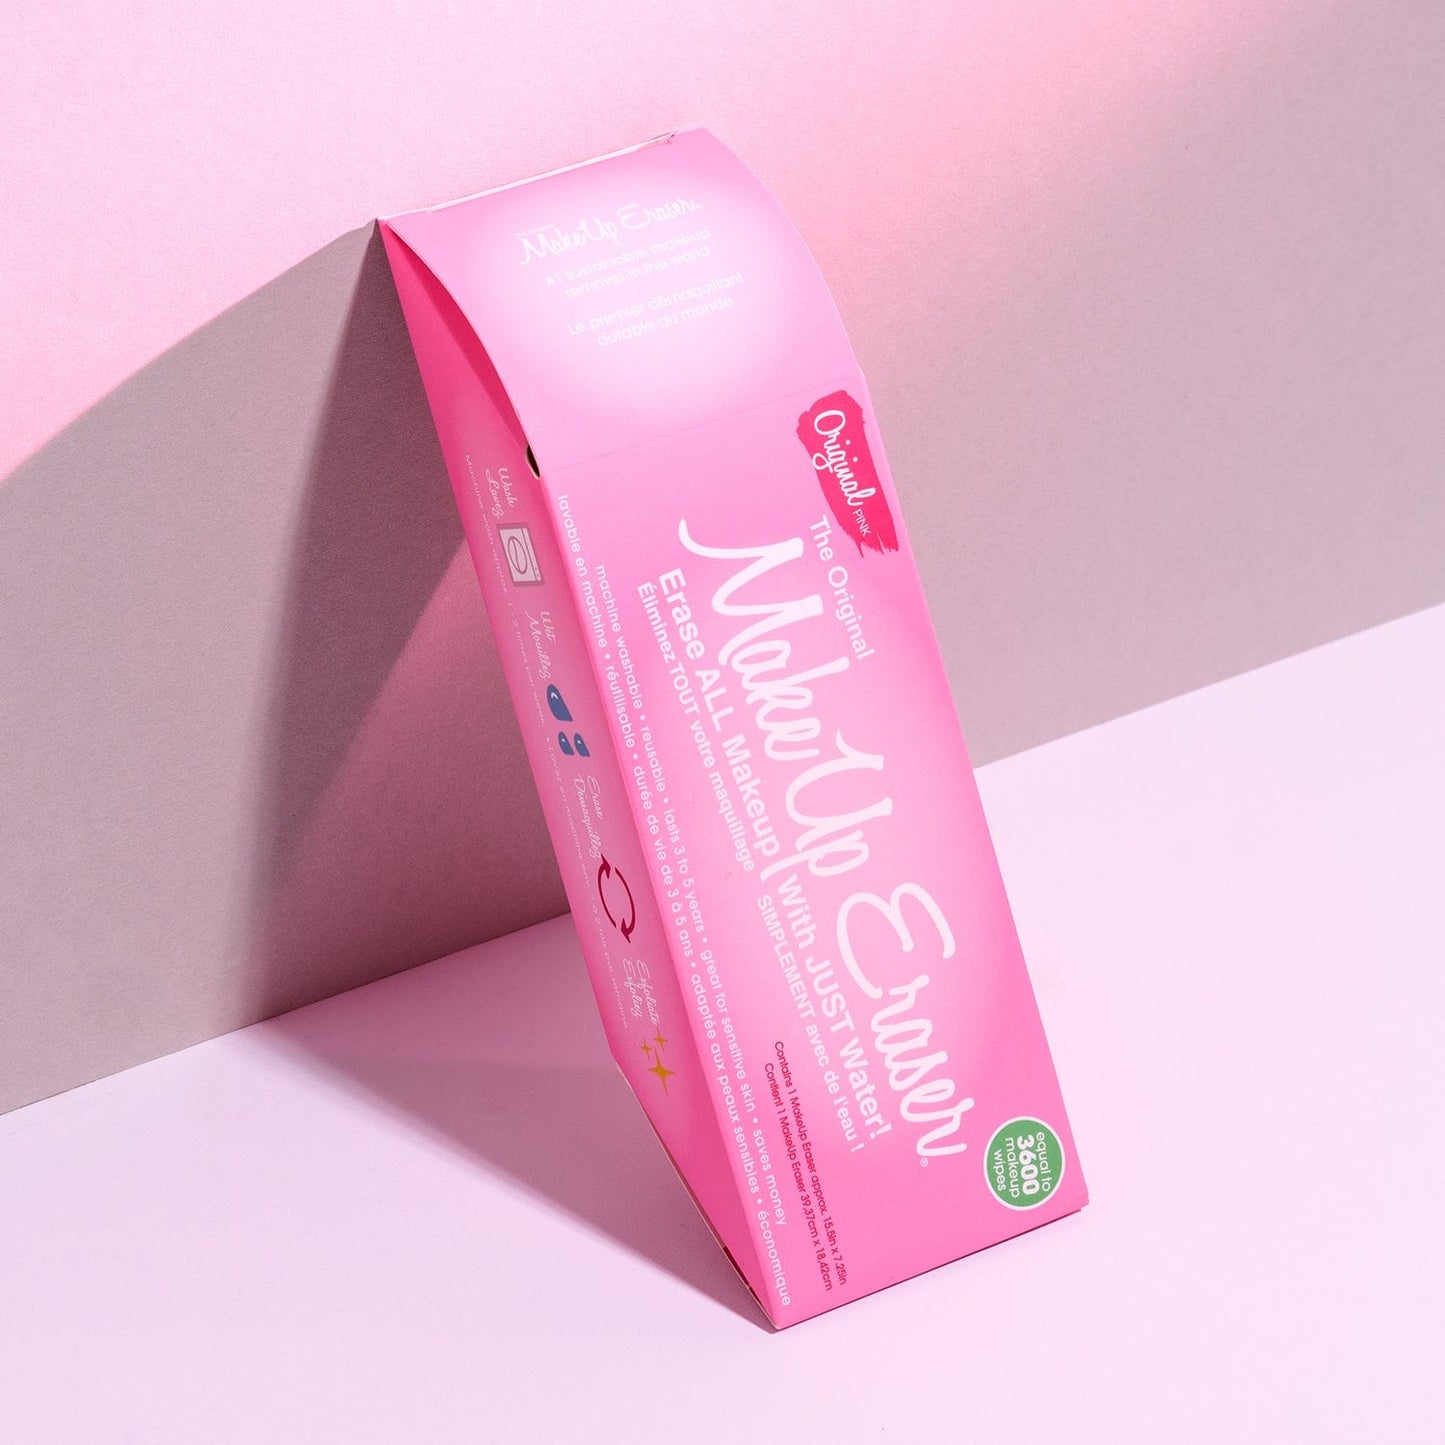 The 'Pretty in Pink' Box